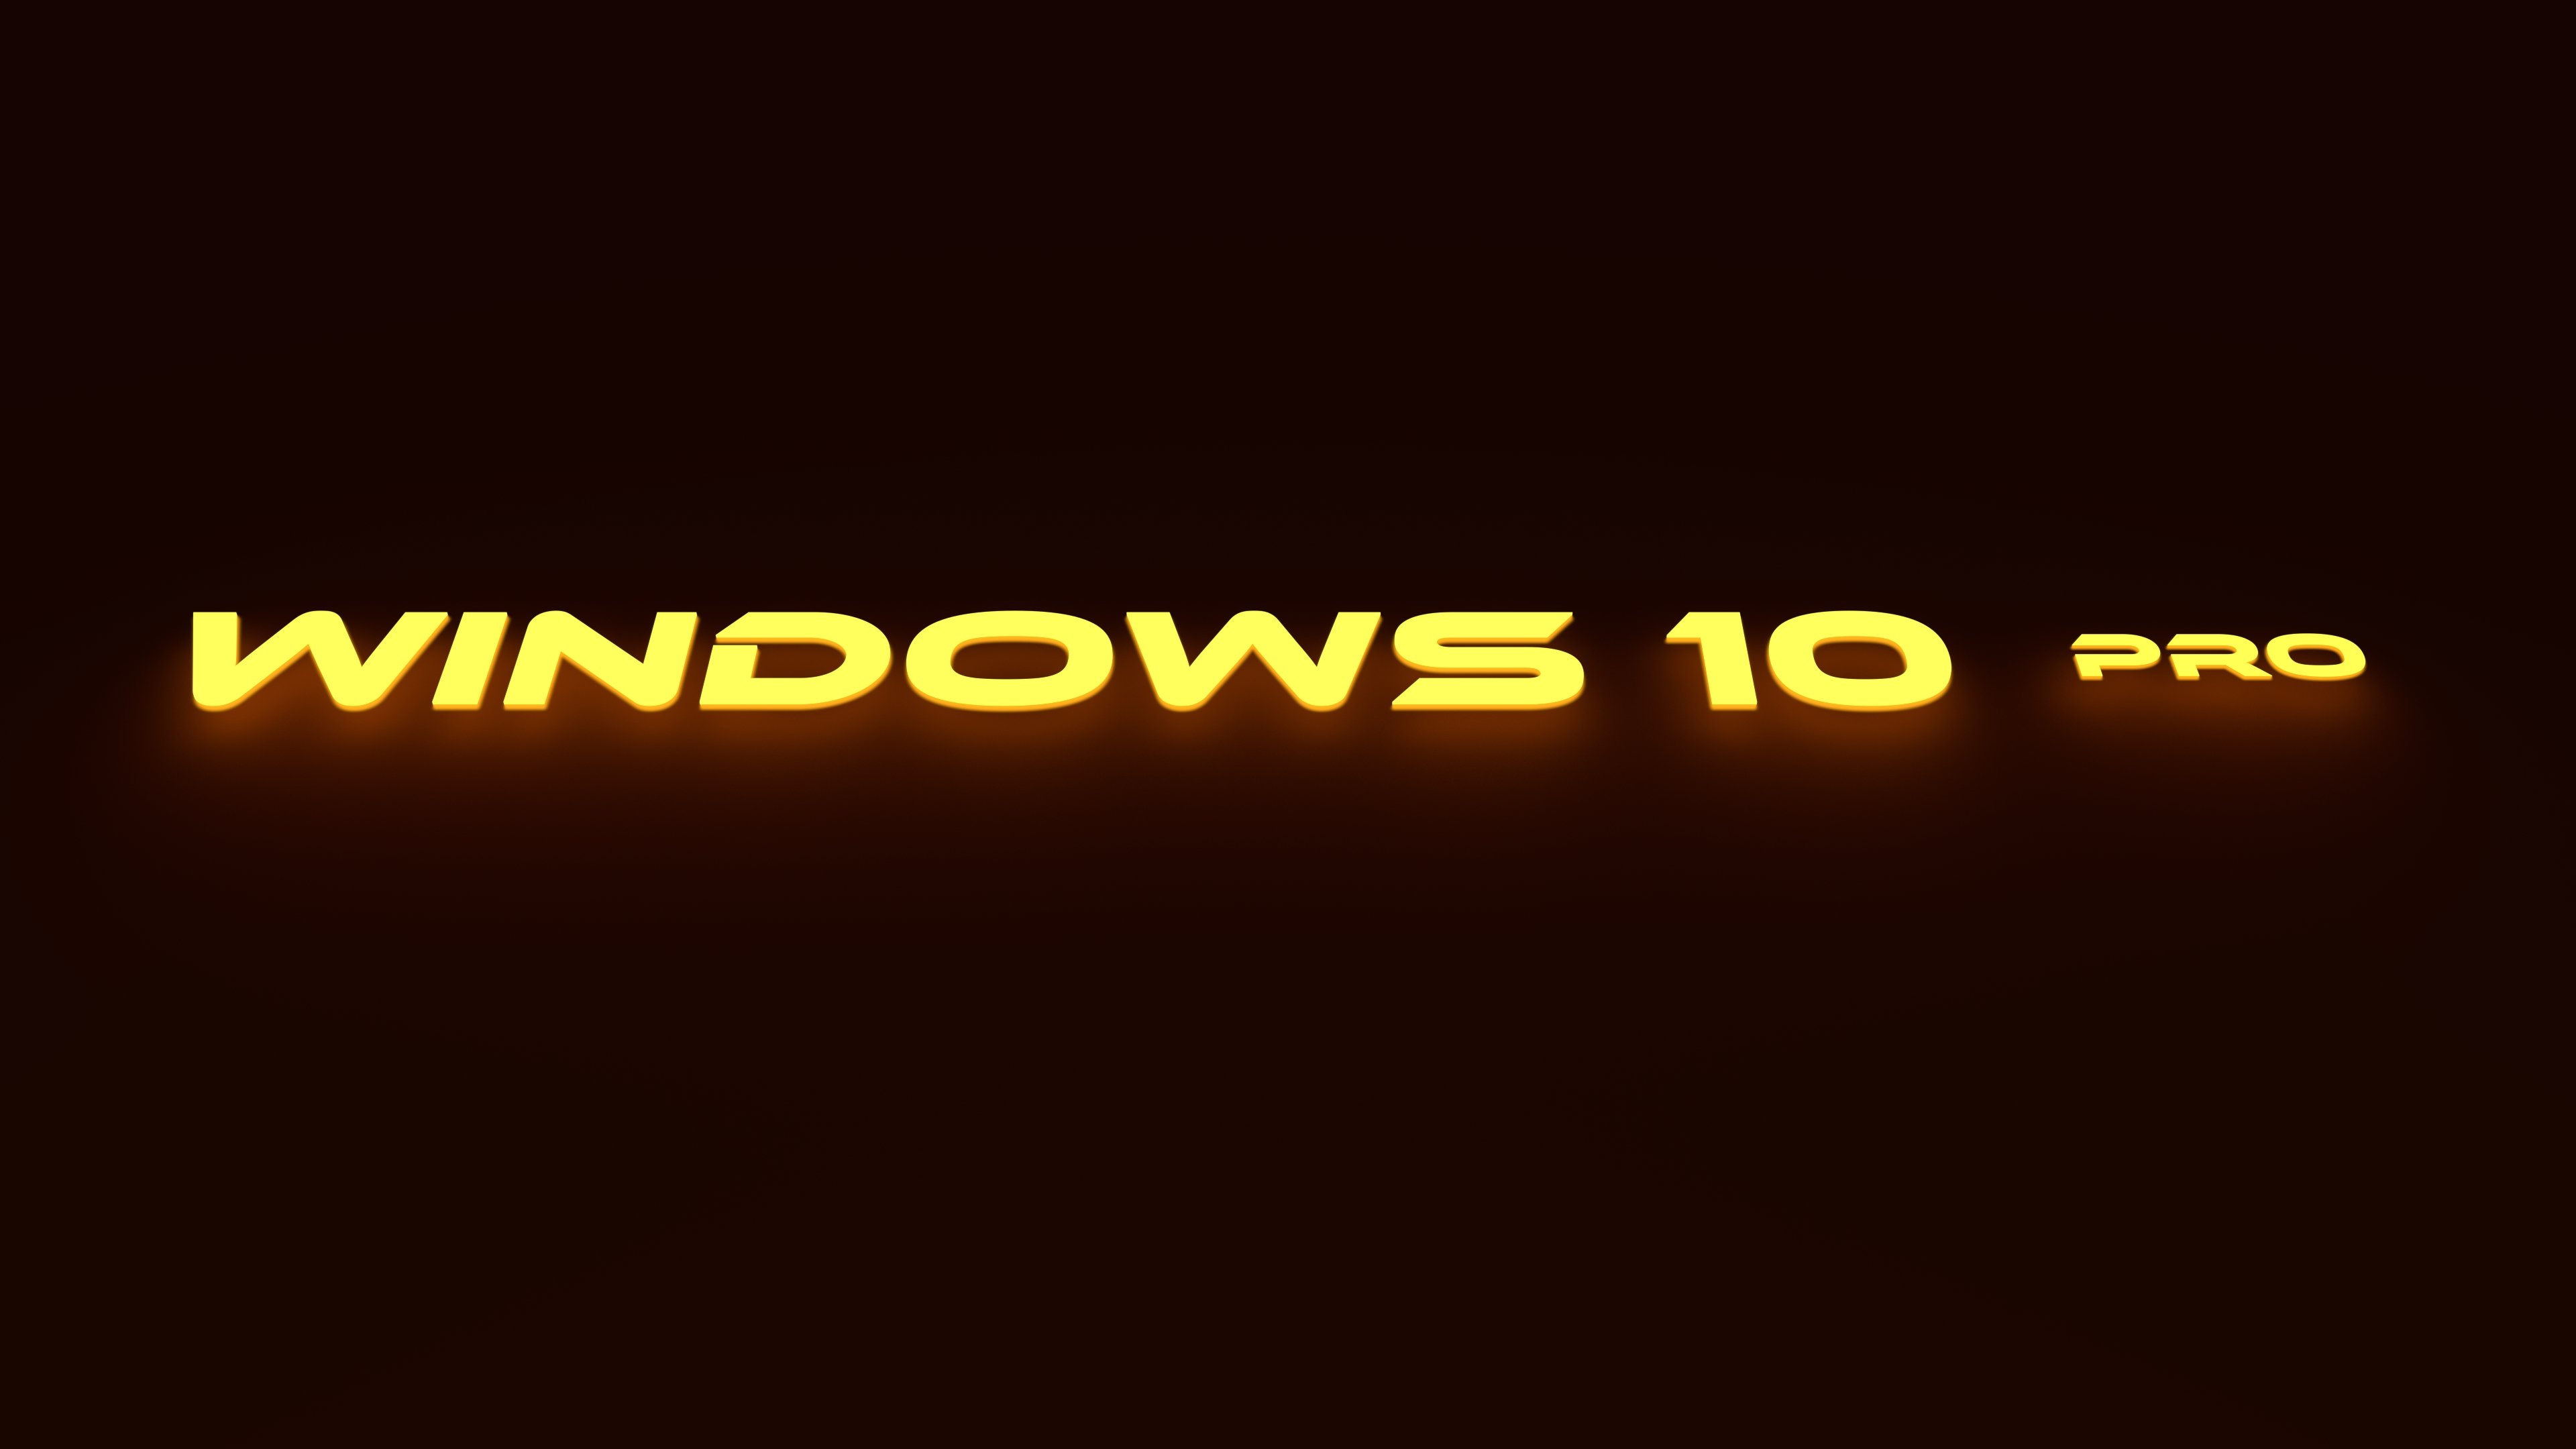 Windows 10 Pro glow yellow